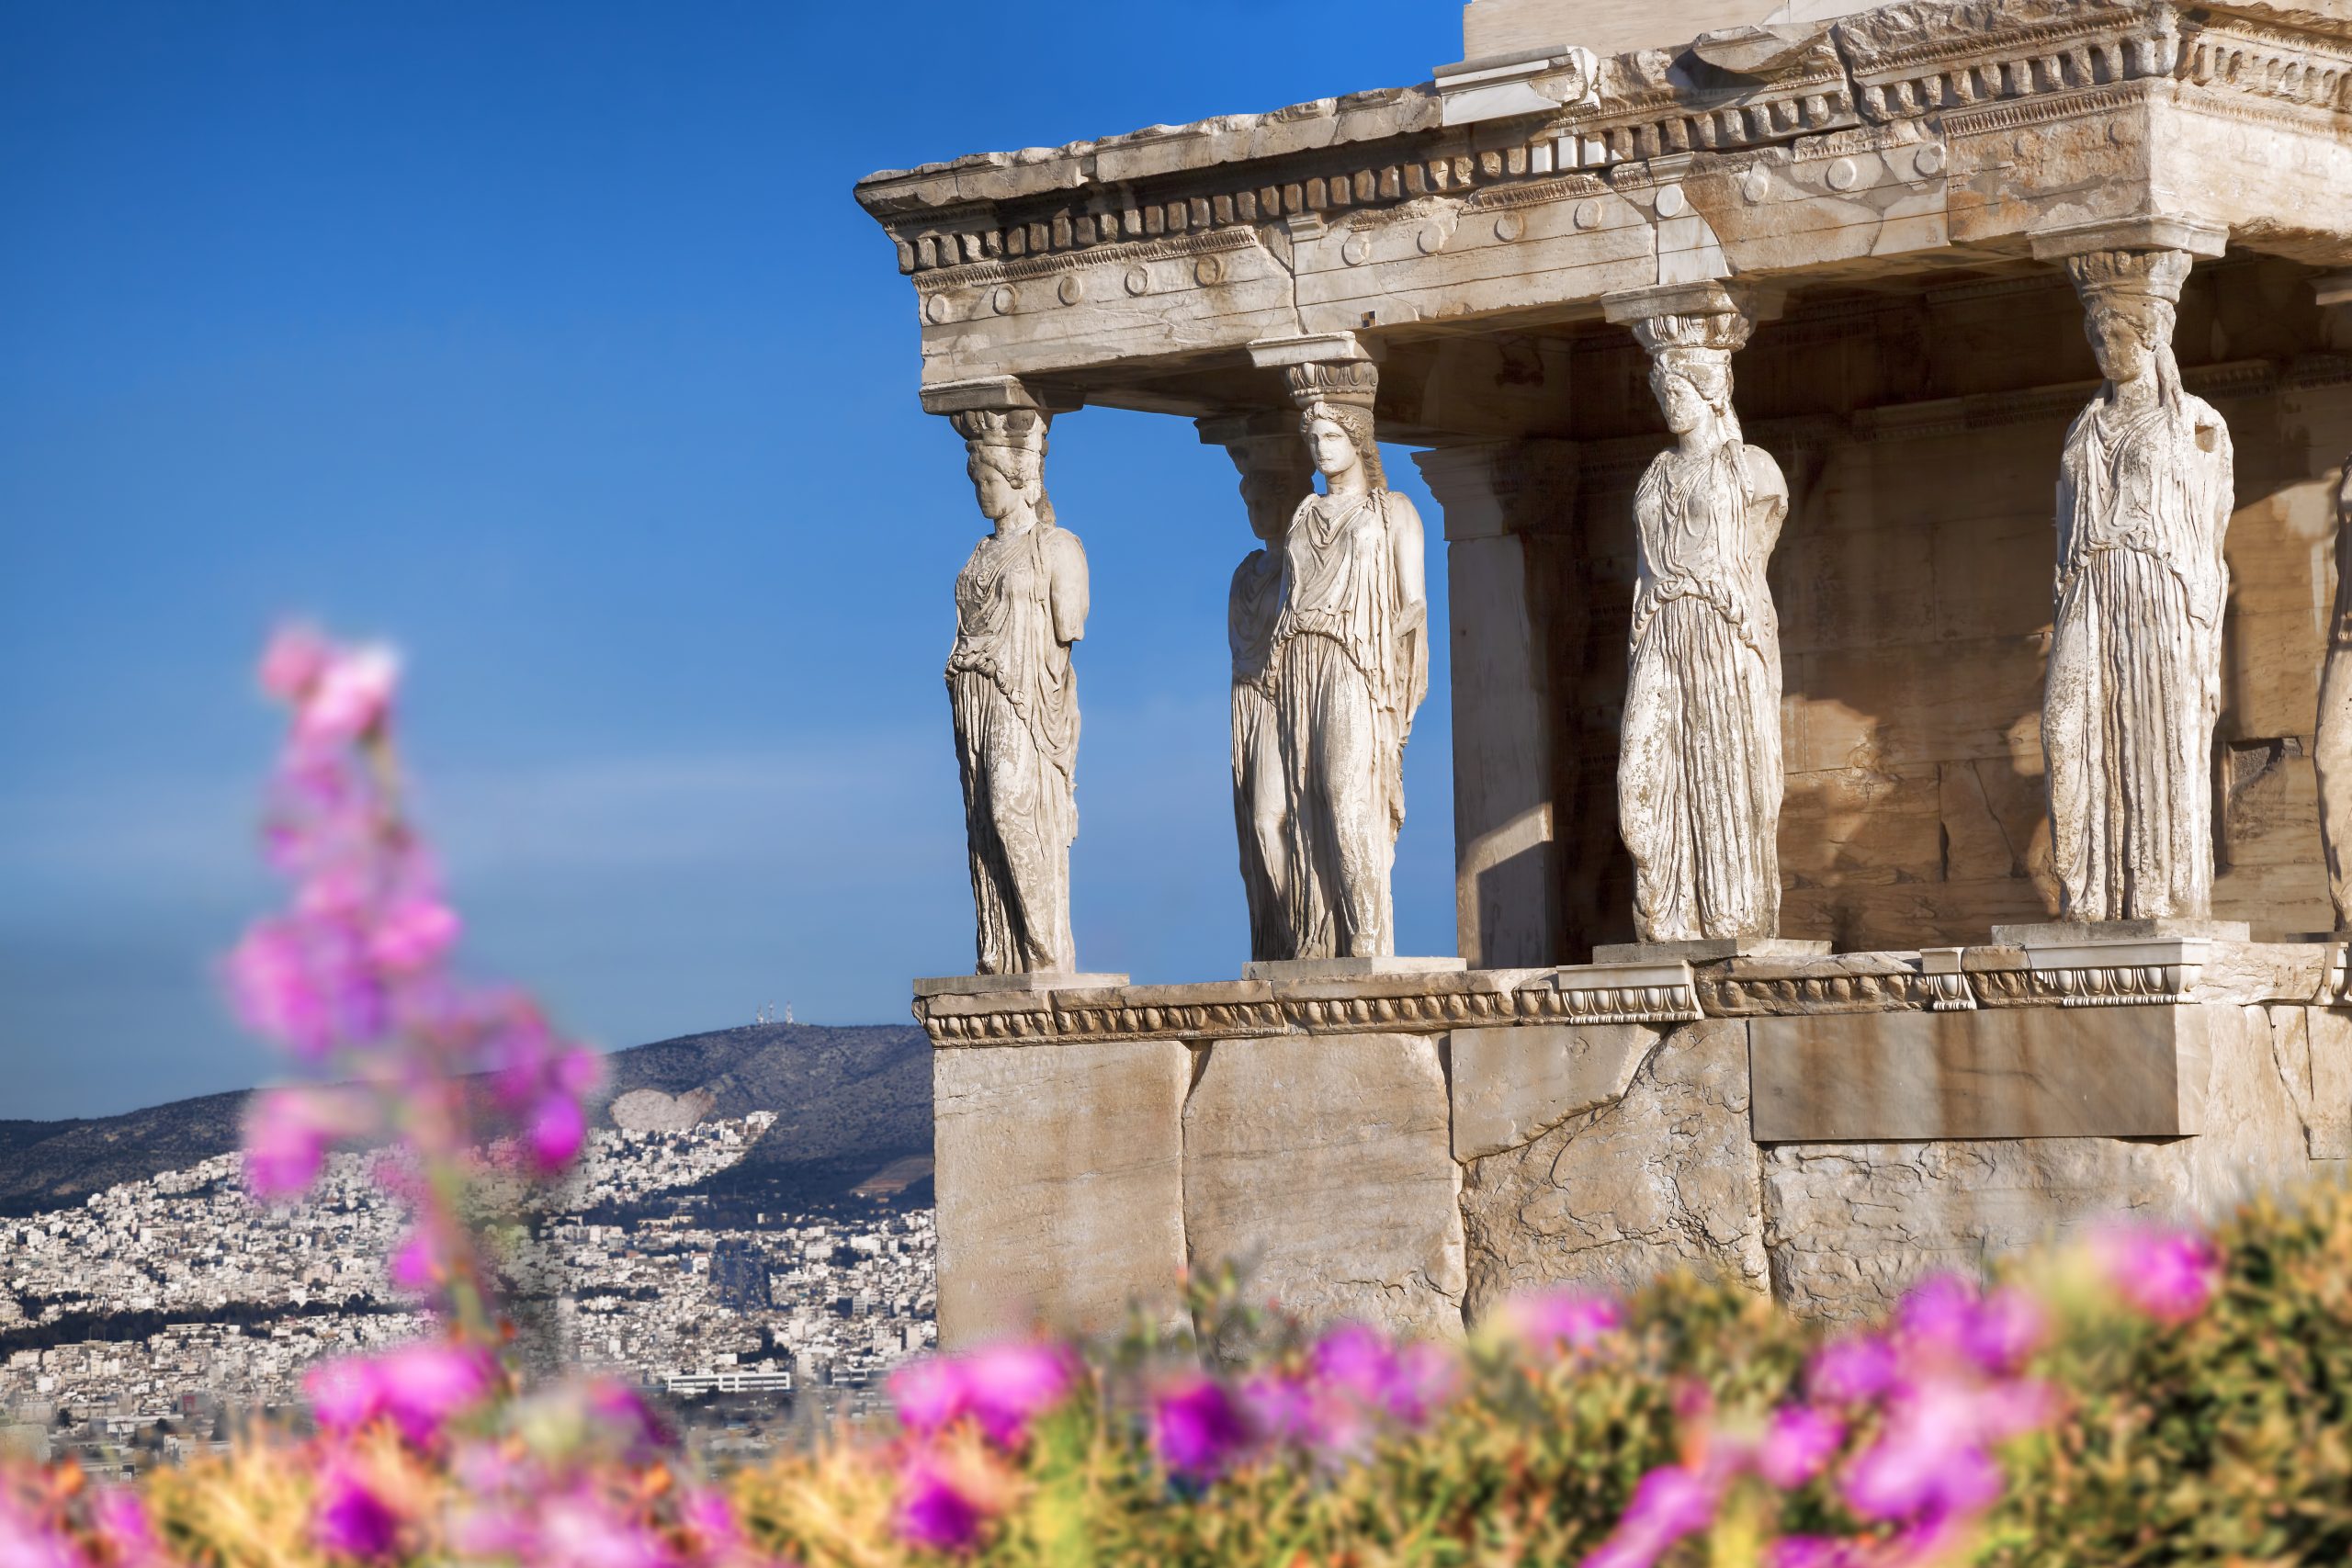 Image of Parthenon temple during spring time on the Athenian Acropolis, Greece - April 2022 Garden of the Gods cruise.